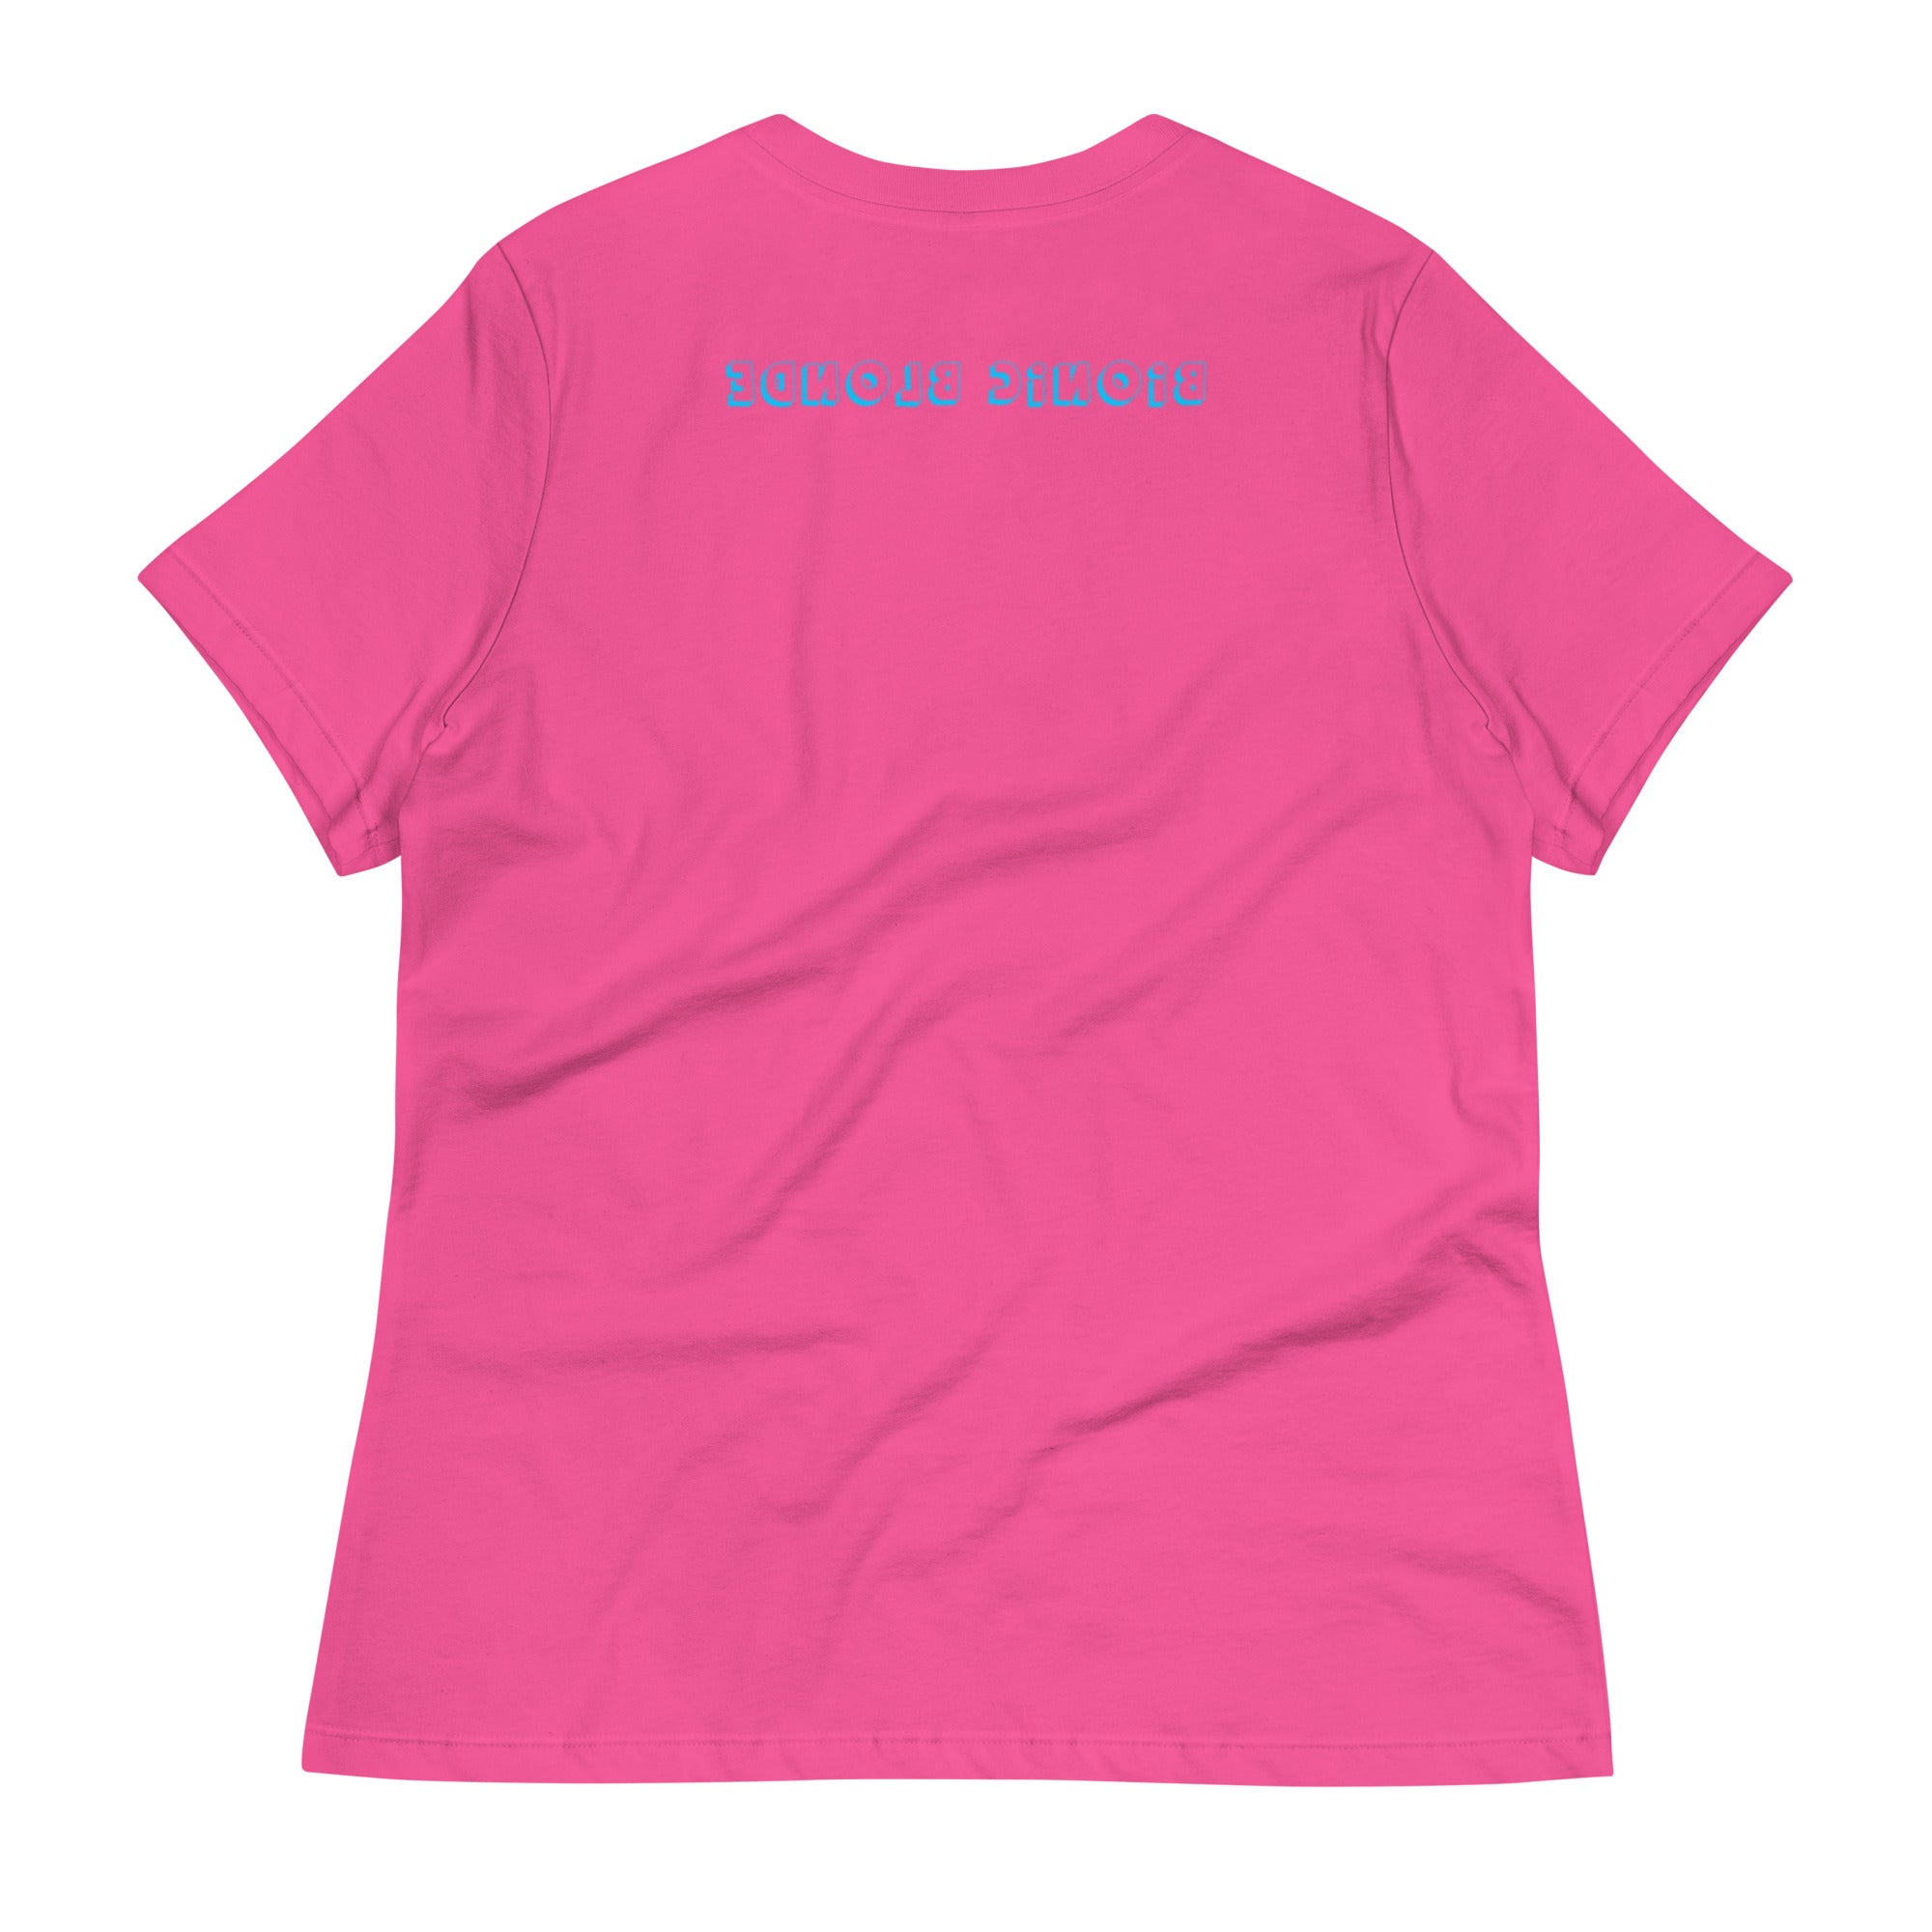 Women's Relaxed T-Shirt - Bionic Blonde - GRAPHIC T-SHIRTS